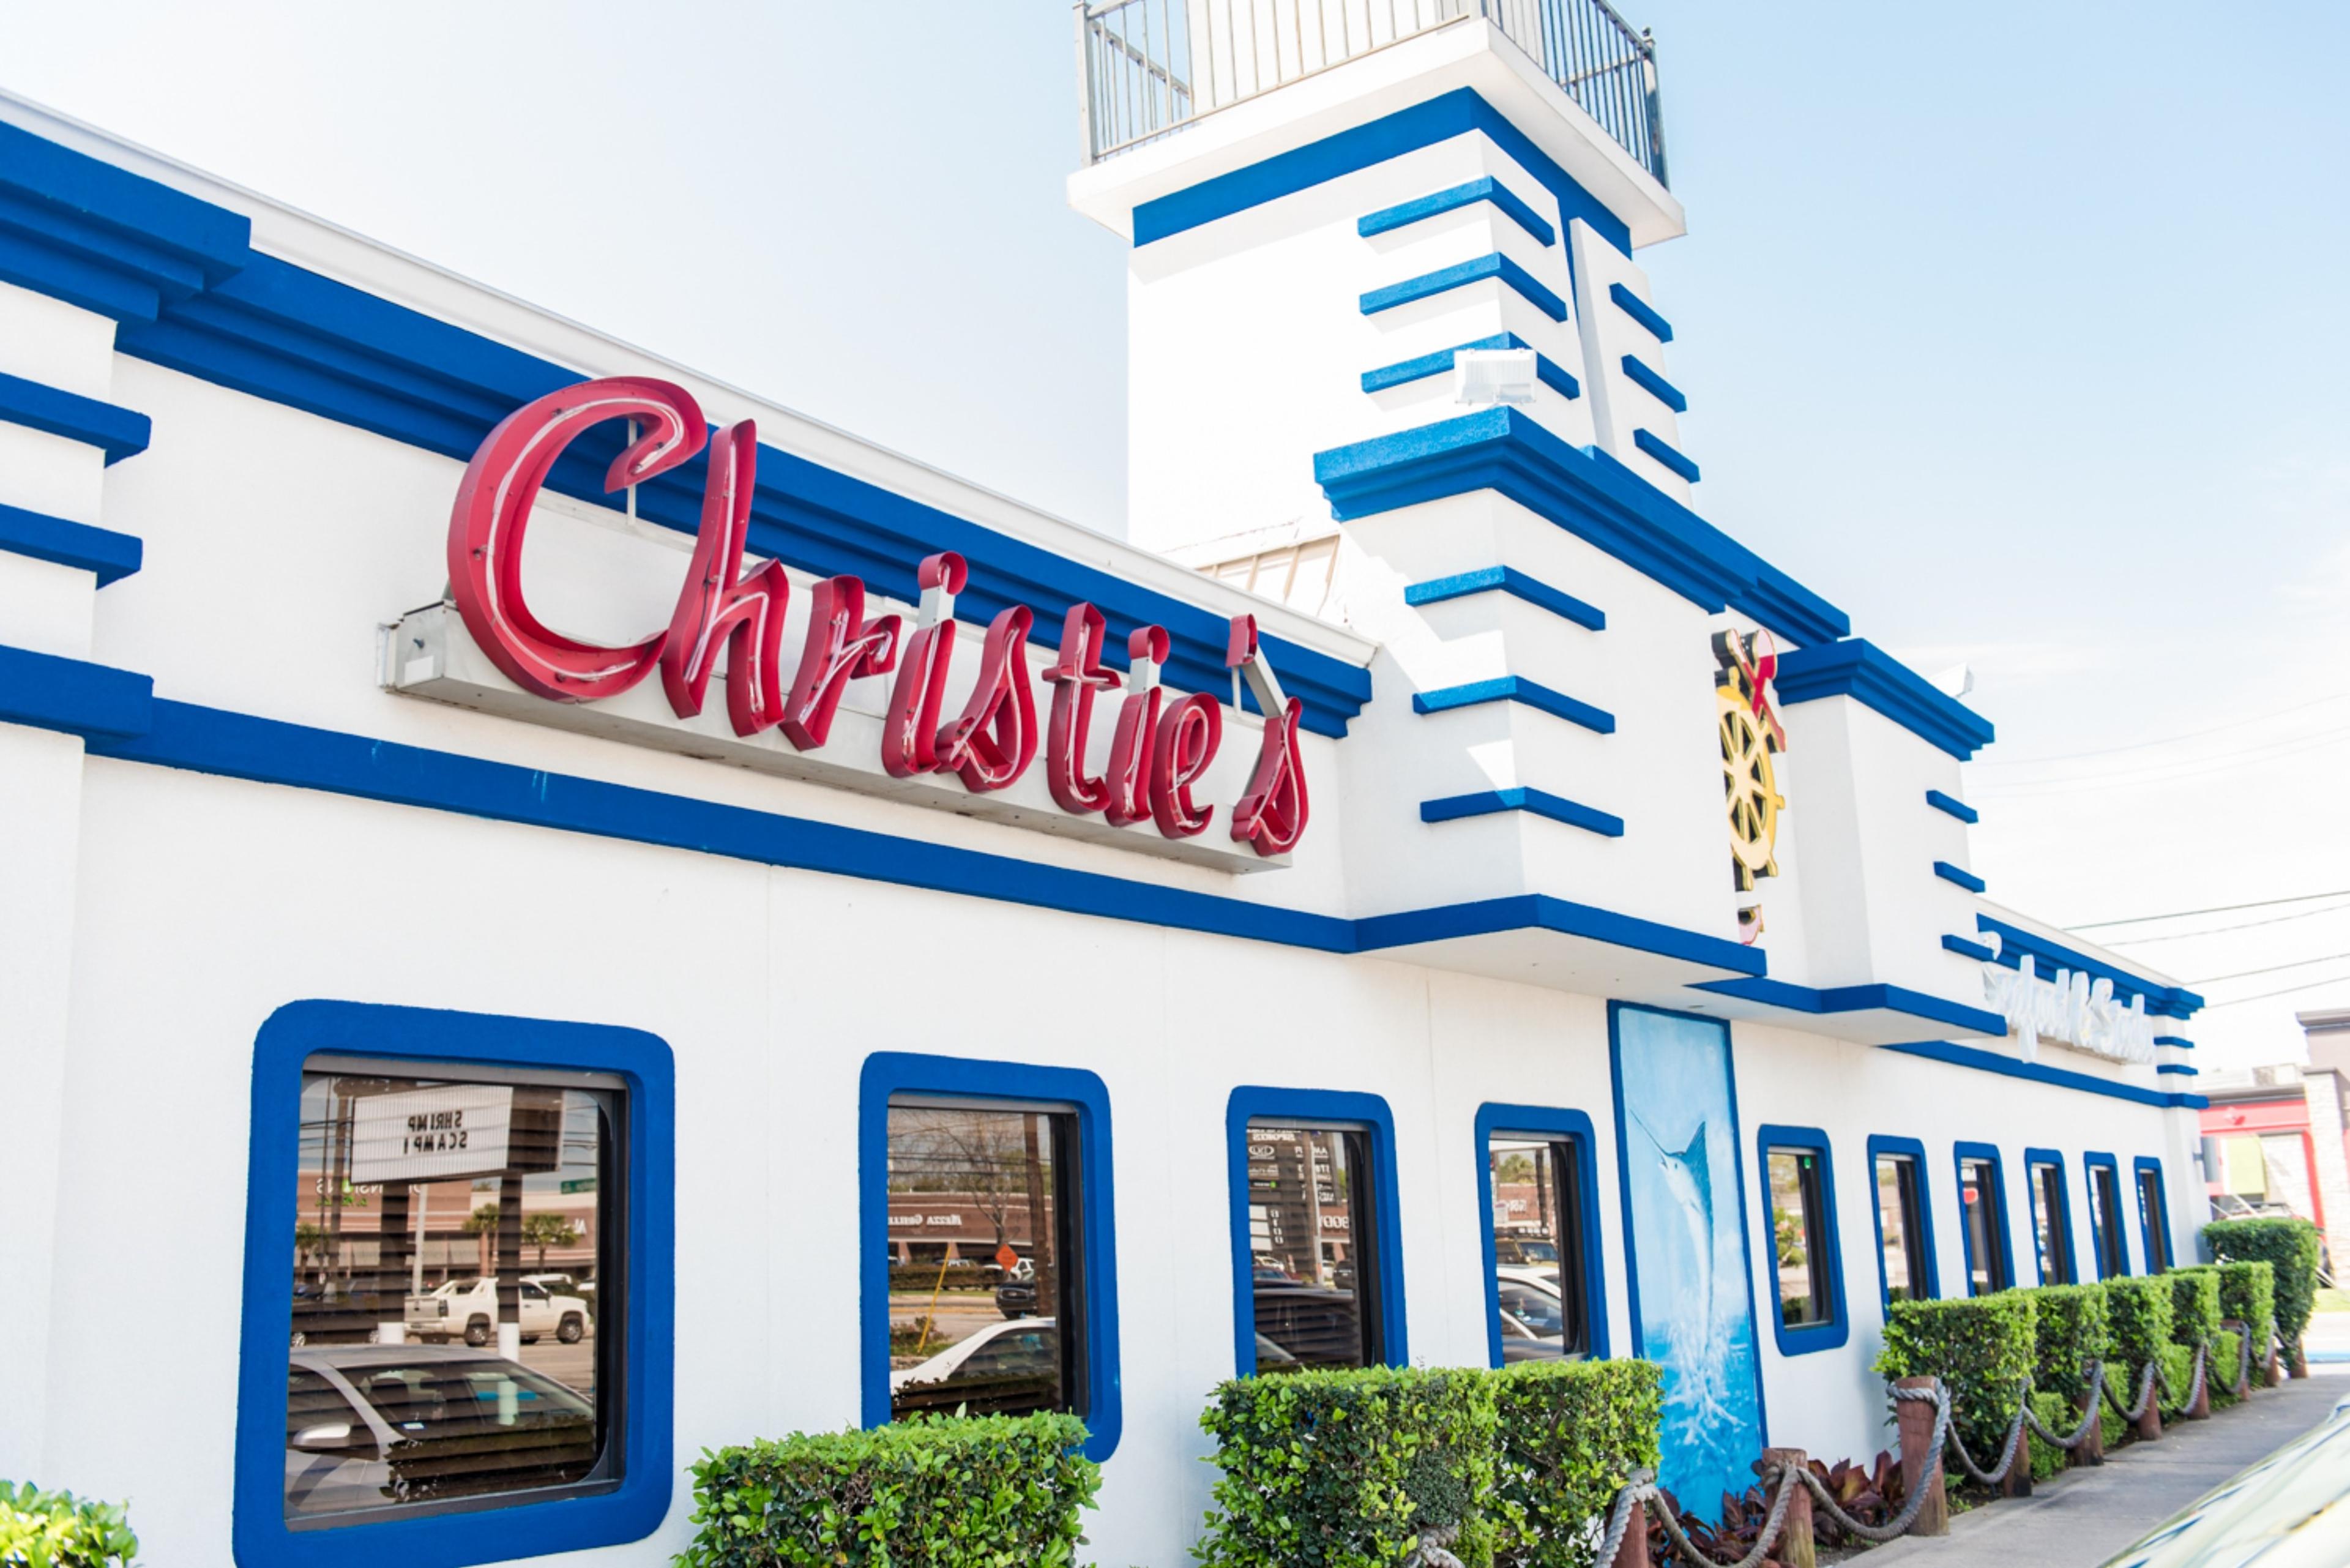 Christie's Seafood & Steaks